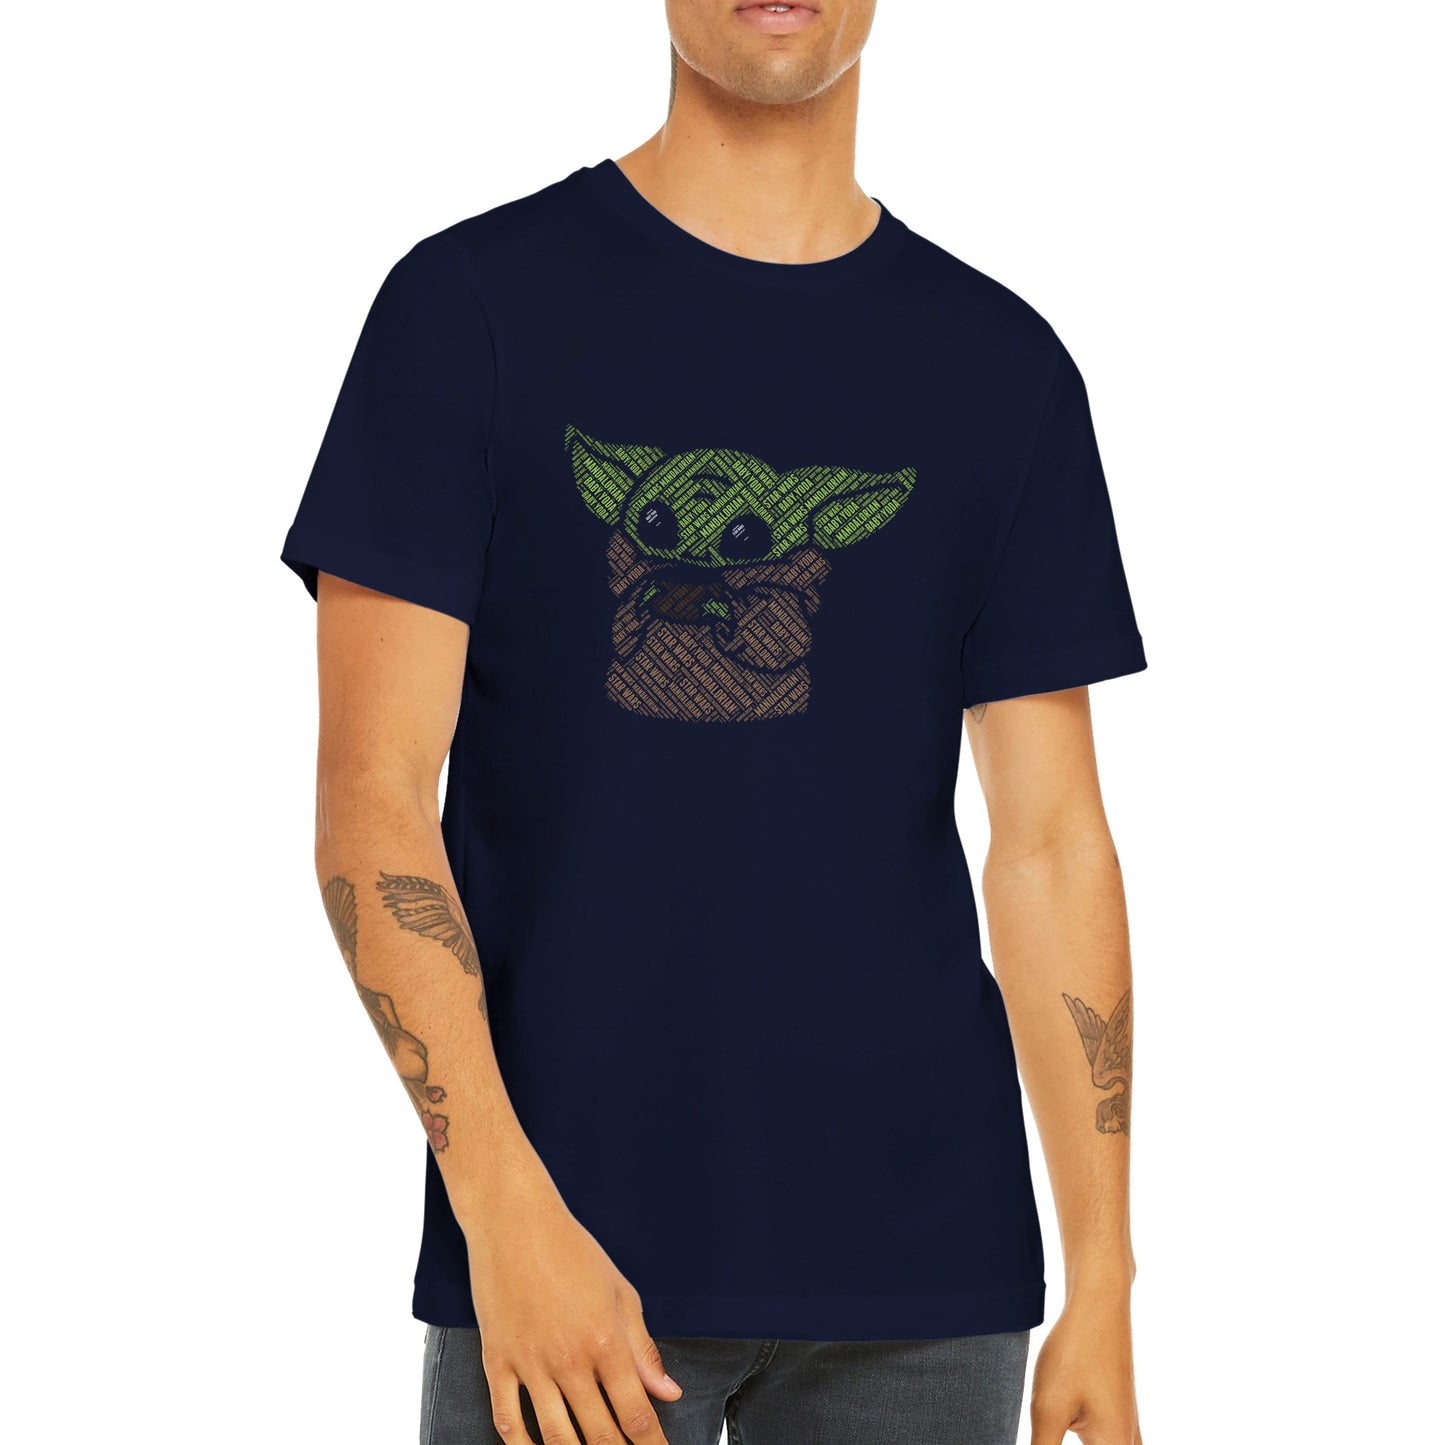 Artwork T-shirt - Baby Yoda Kalligram Artwork - Premium Unisex T-shirt